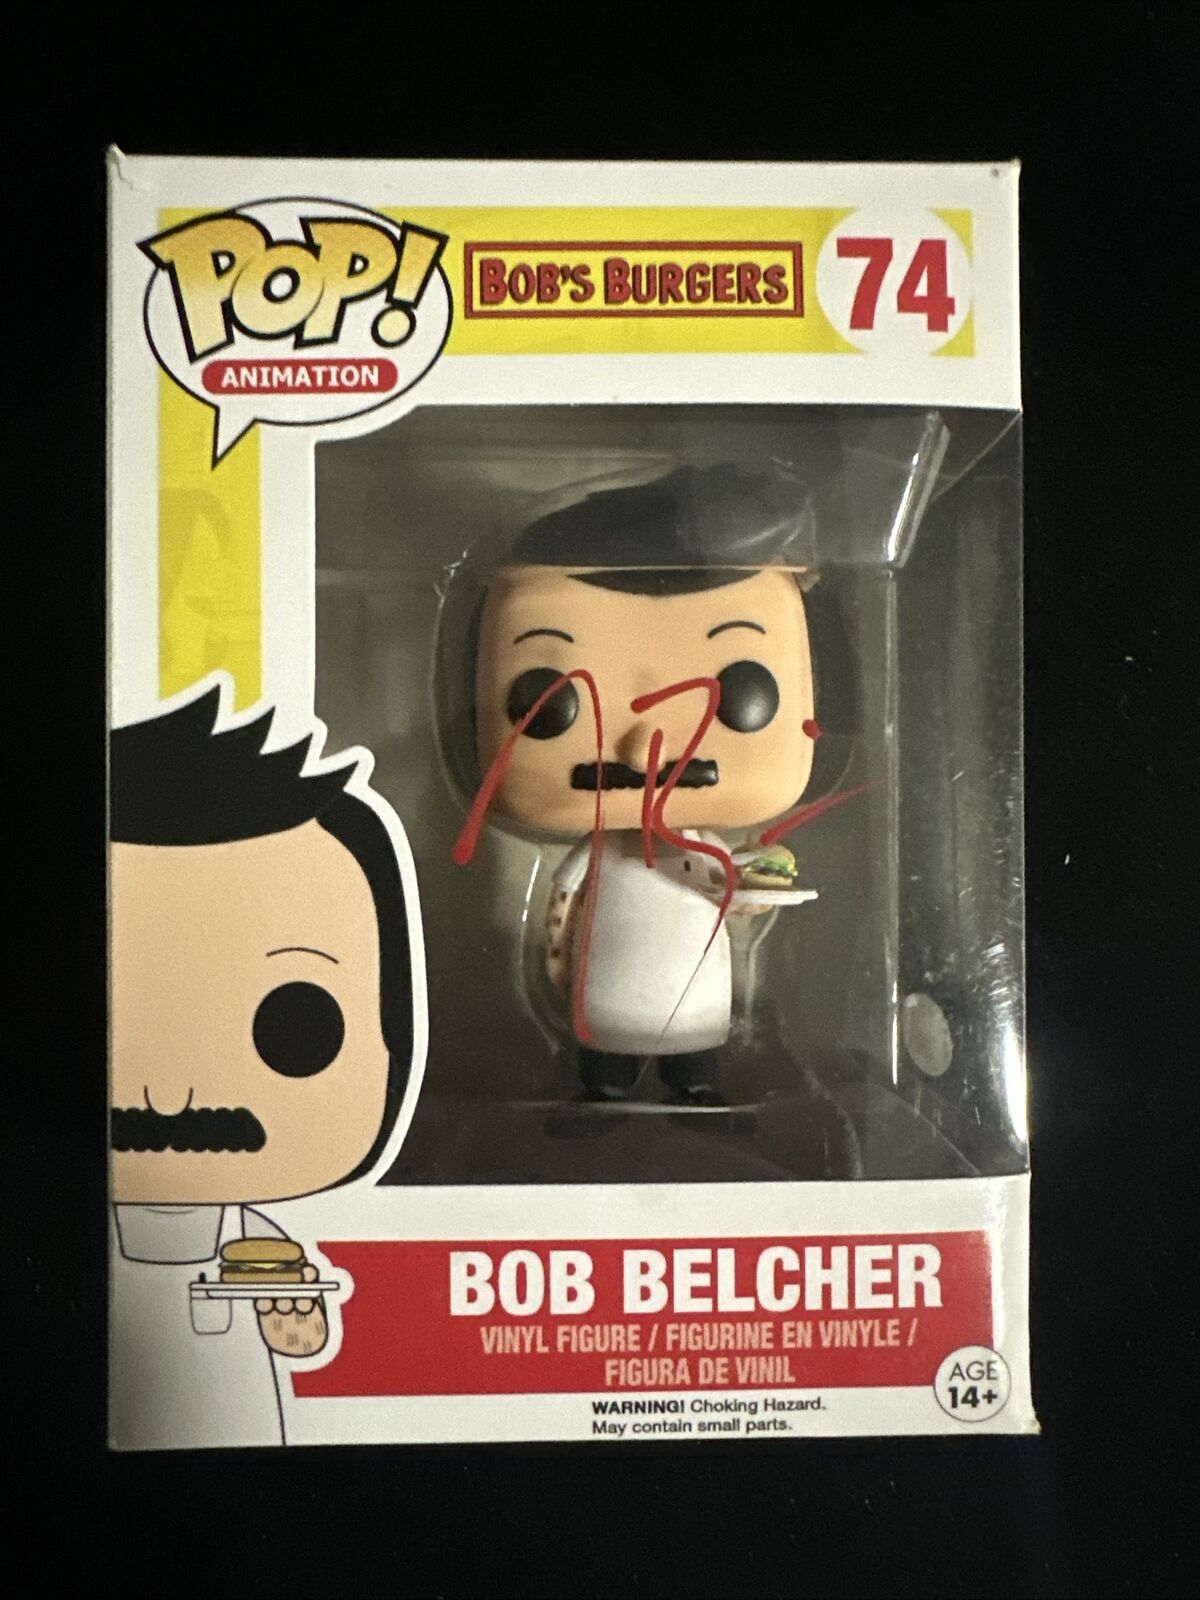 H. Jon Benjamin Signed Bob's Burgers Bob Belcher 74 Funko Pop - JSA AB16545